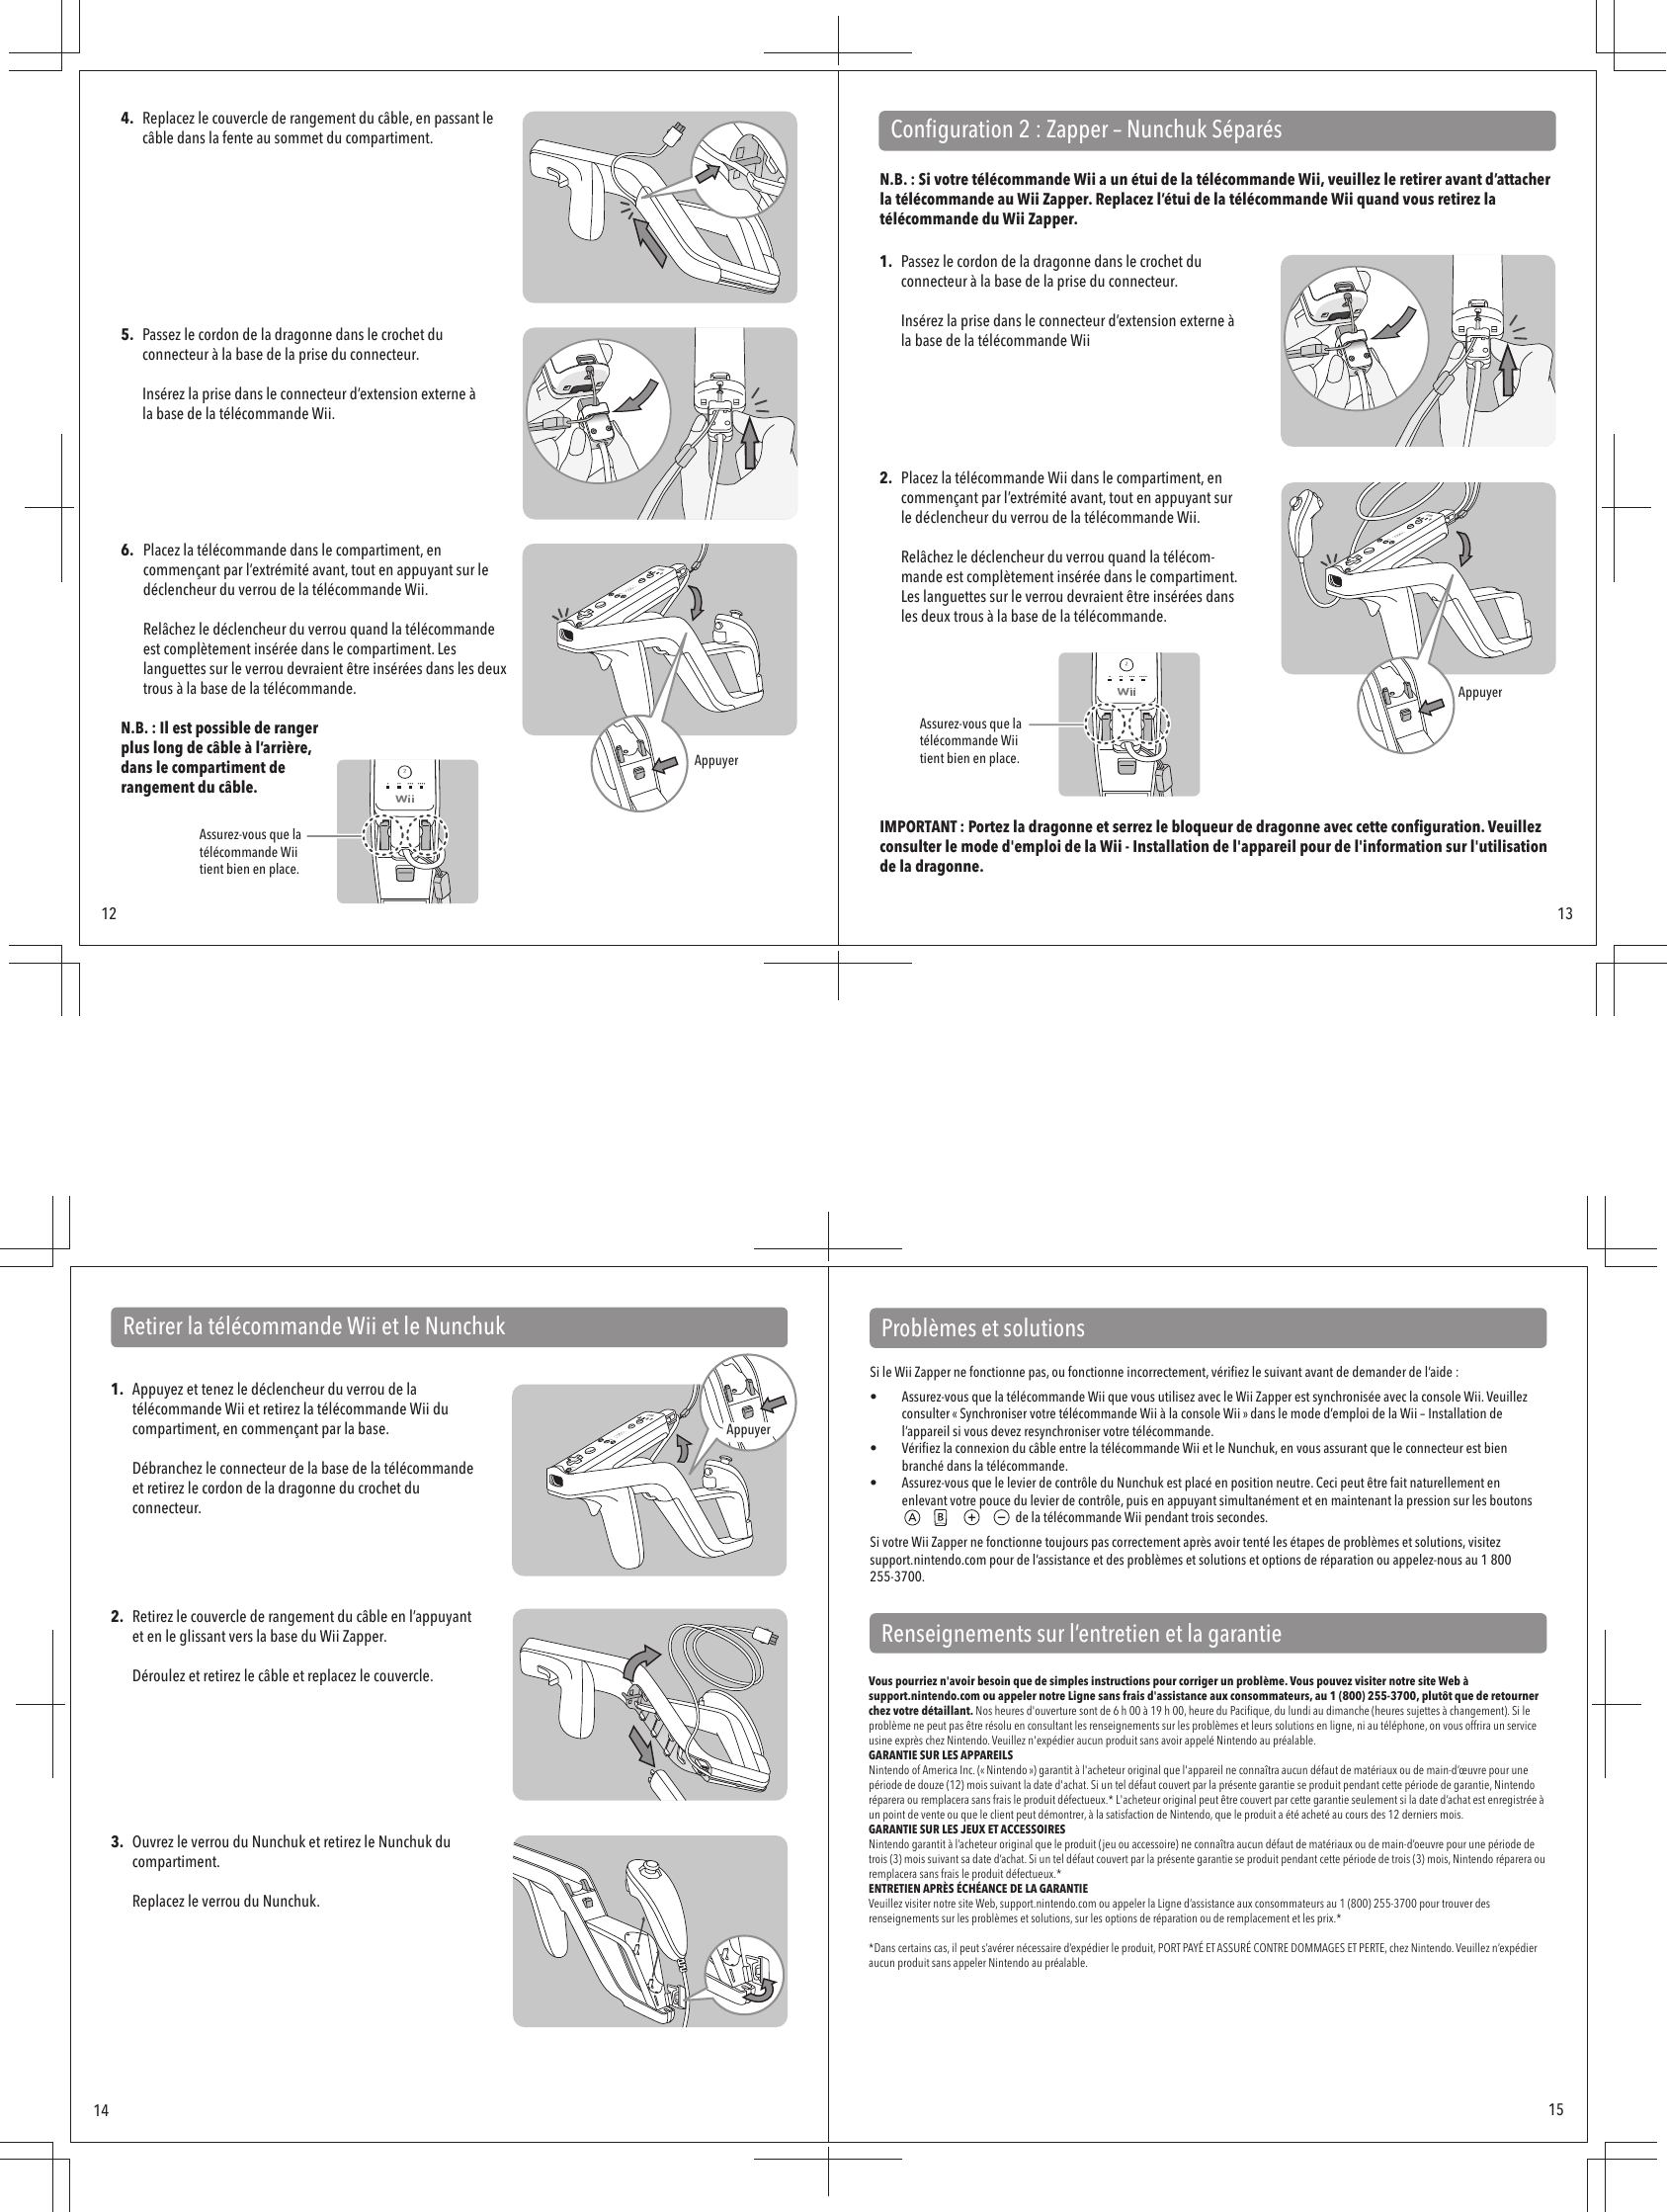 Page 4 of 6 - Nintendo Nintendo-Wii-Zapper-User-Guide- WiiZ00_03  Nintendo-wii-zapper-user-guide